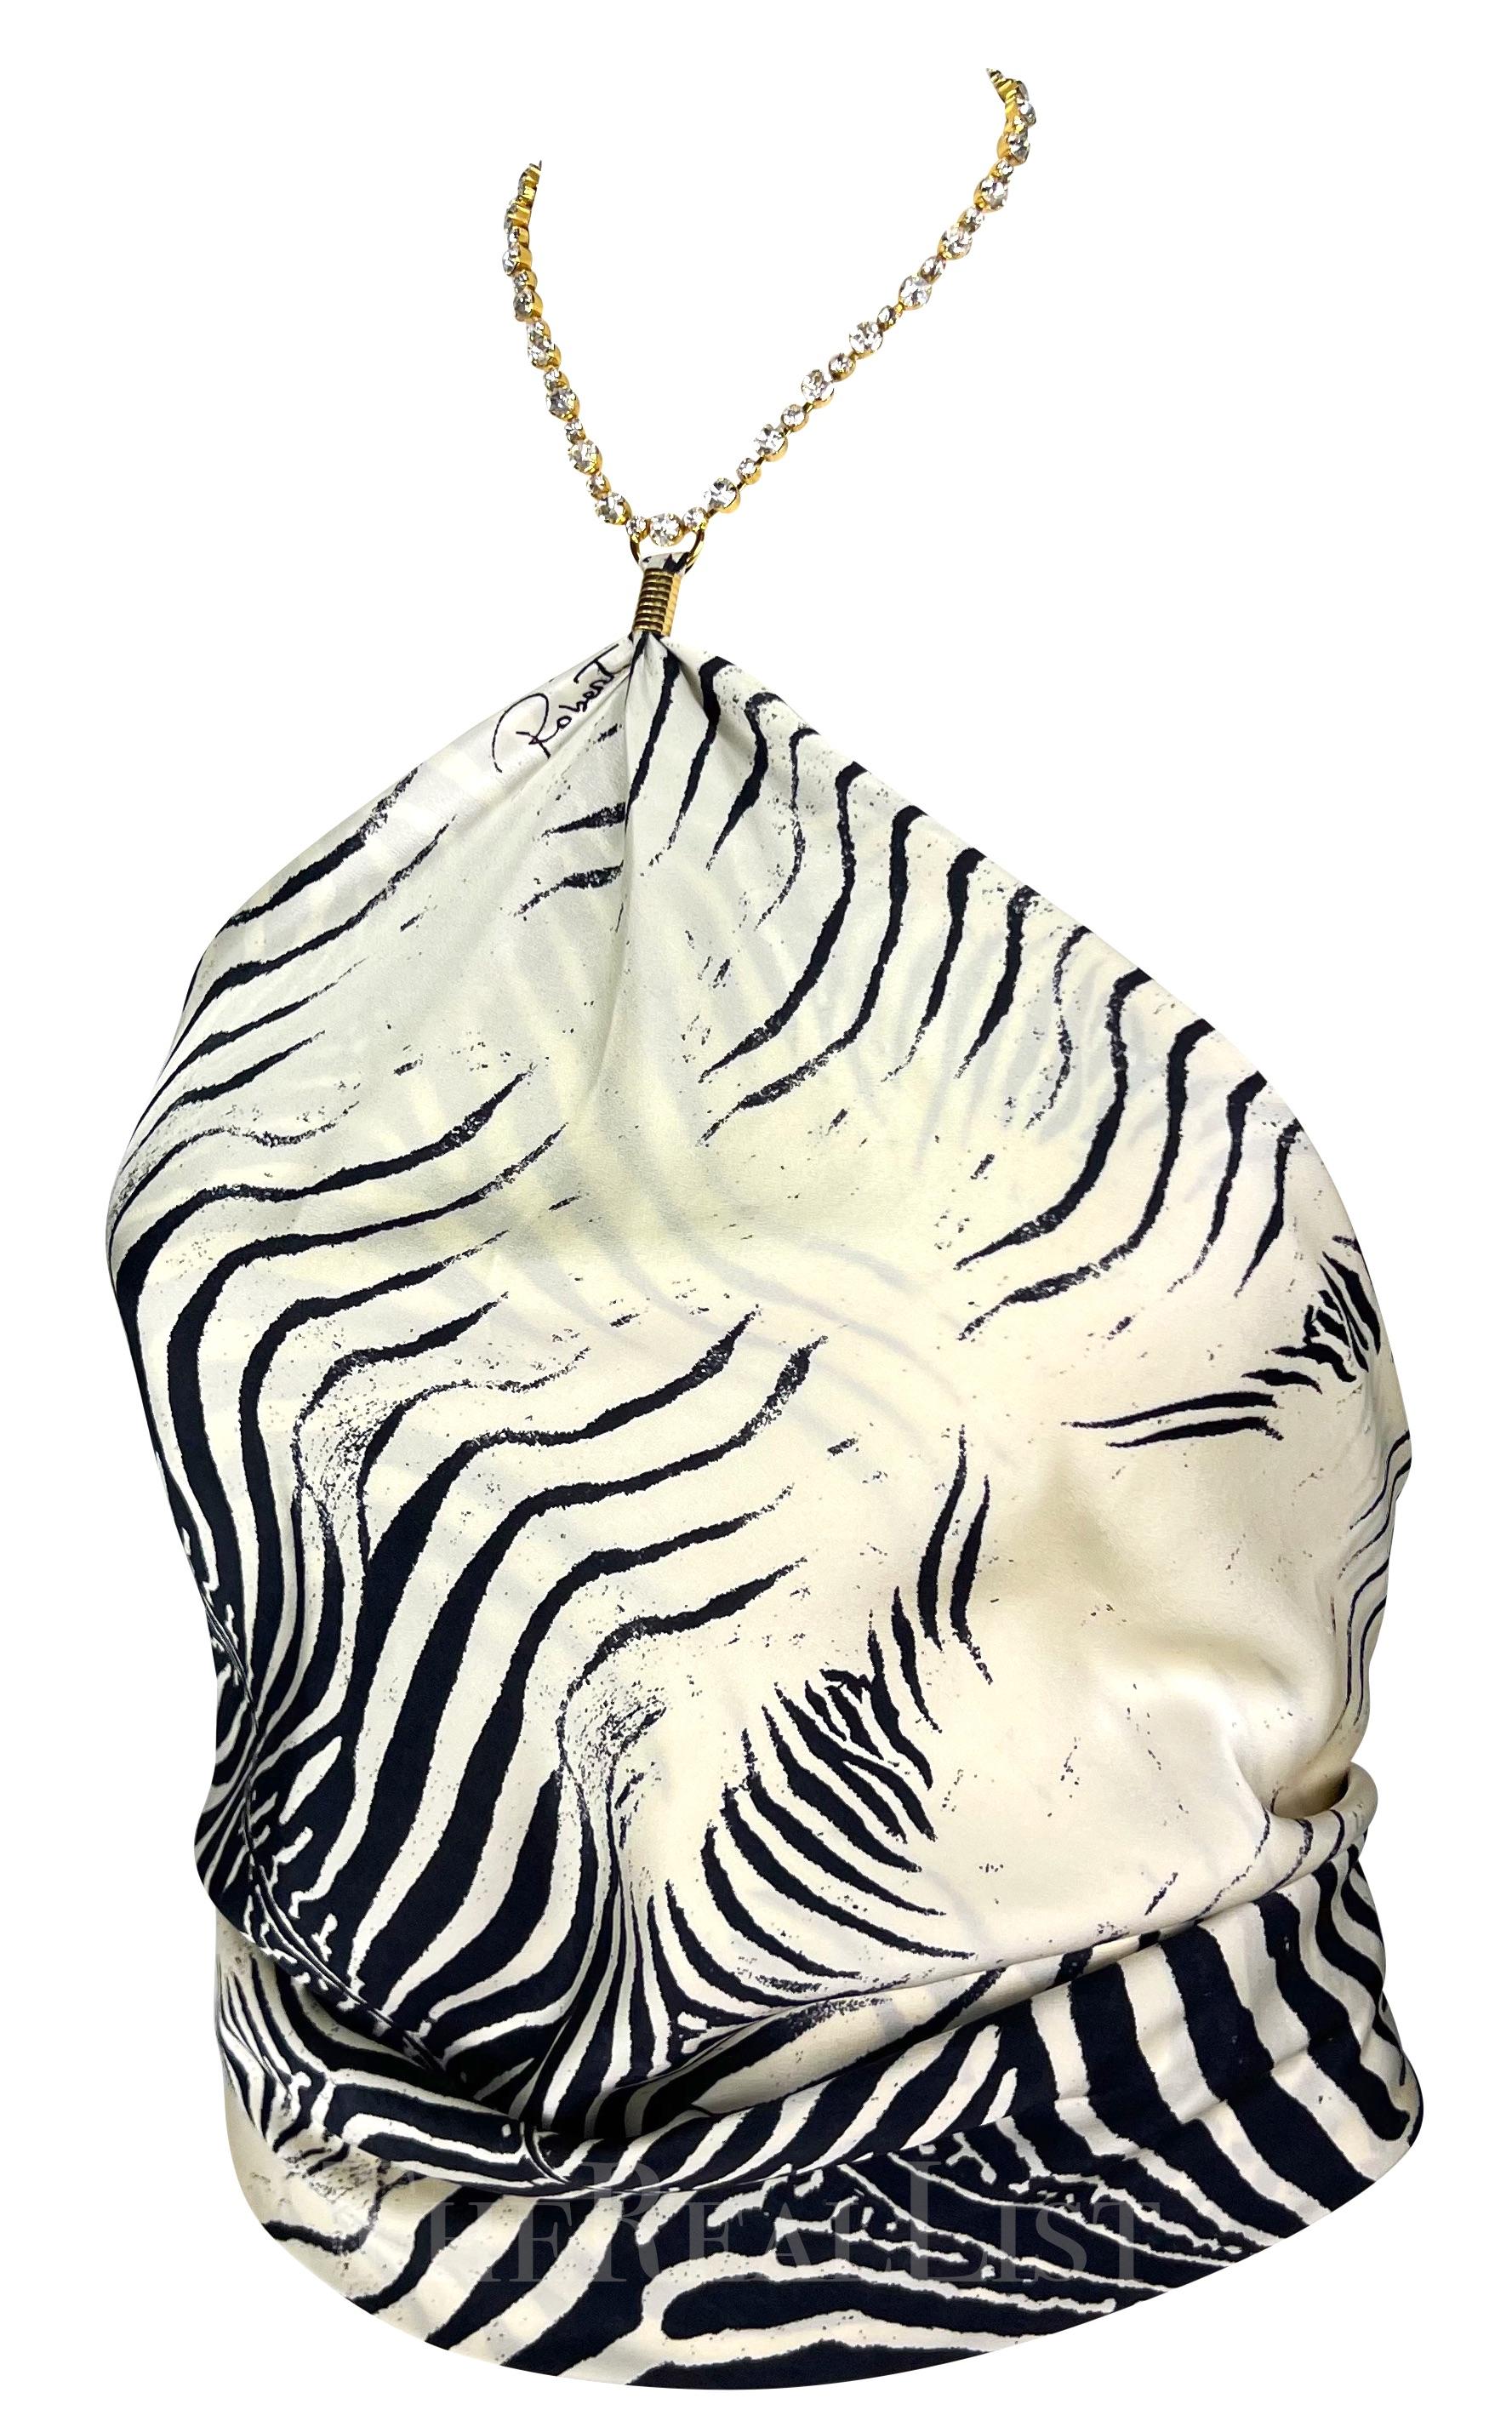 S/S 2000 Roberto Cavalli Rhinestone Zebra Print Triangle Silk Scarf Crop Top Excellent état - En vente à West Hollywood, CA